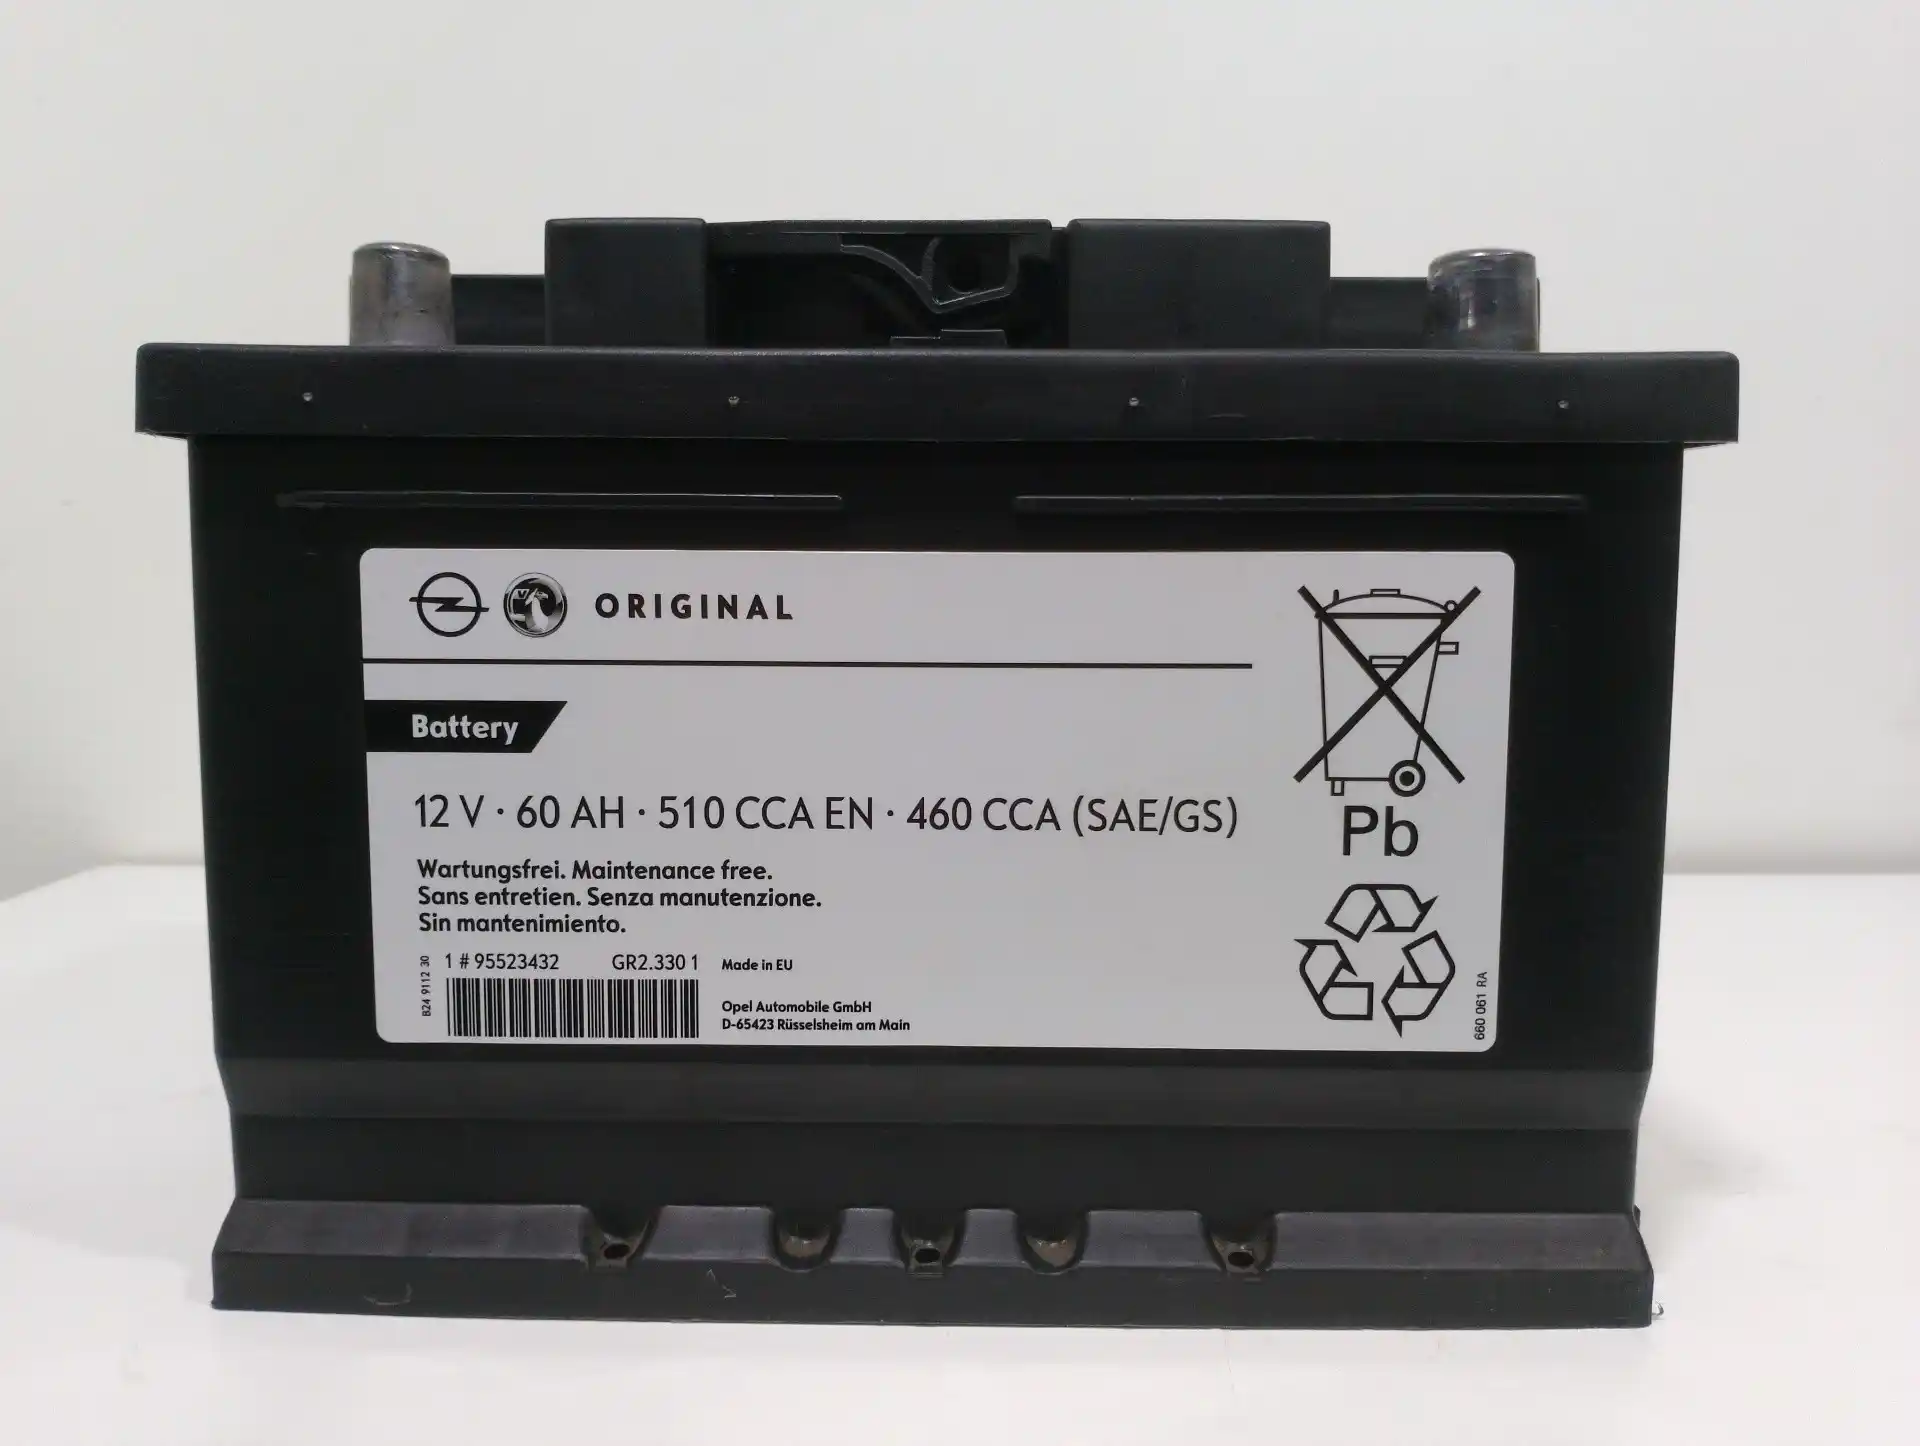 ORIGINAL GM Opel Autobatterie Starterbatterie 12V 60Ah 510 CCA EN